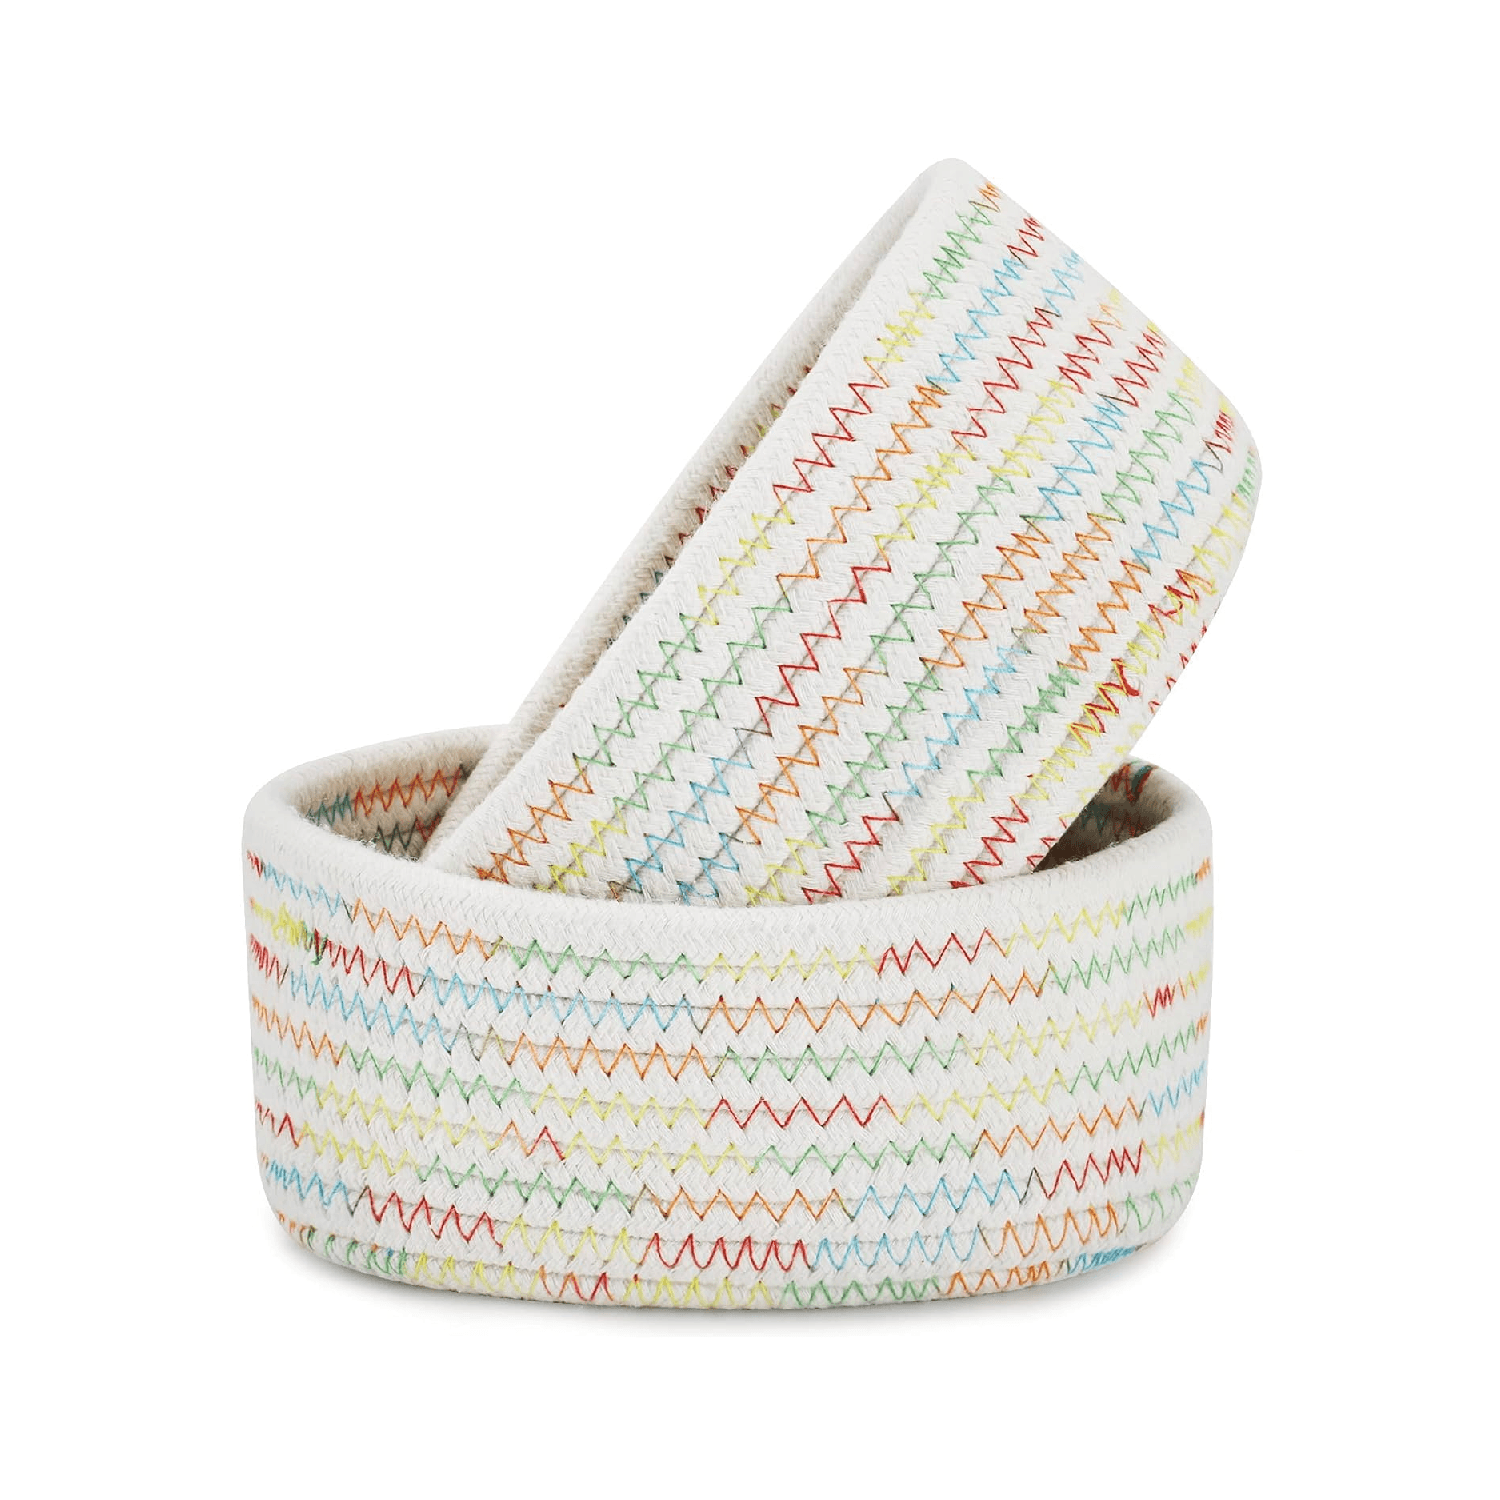 Montessori Abenkle Storage Baskets Set of 2 White With Colorful Thread